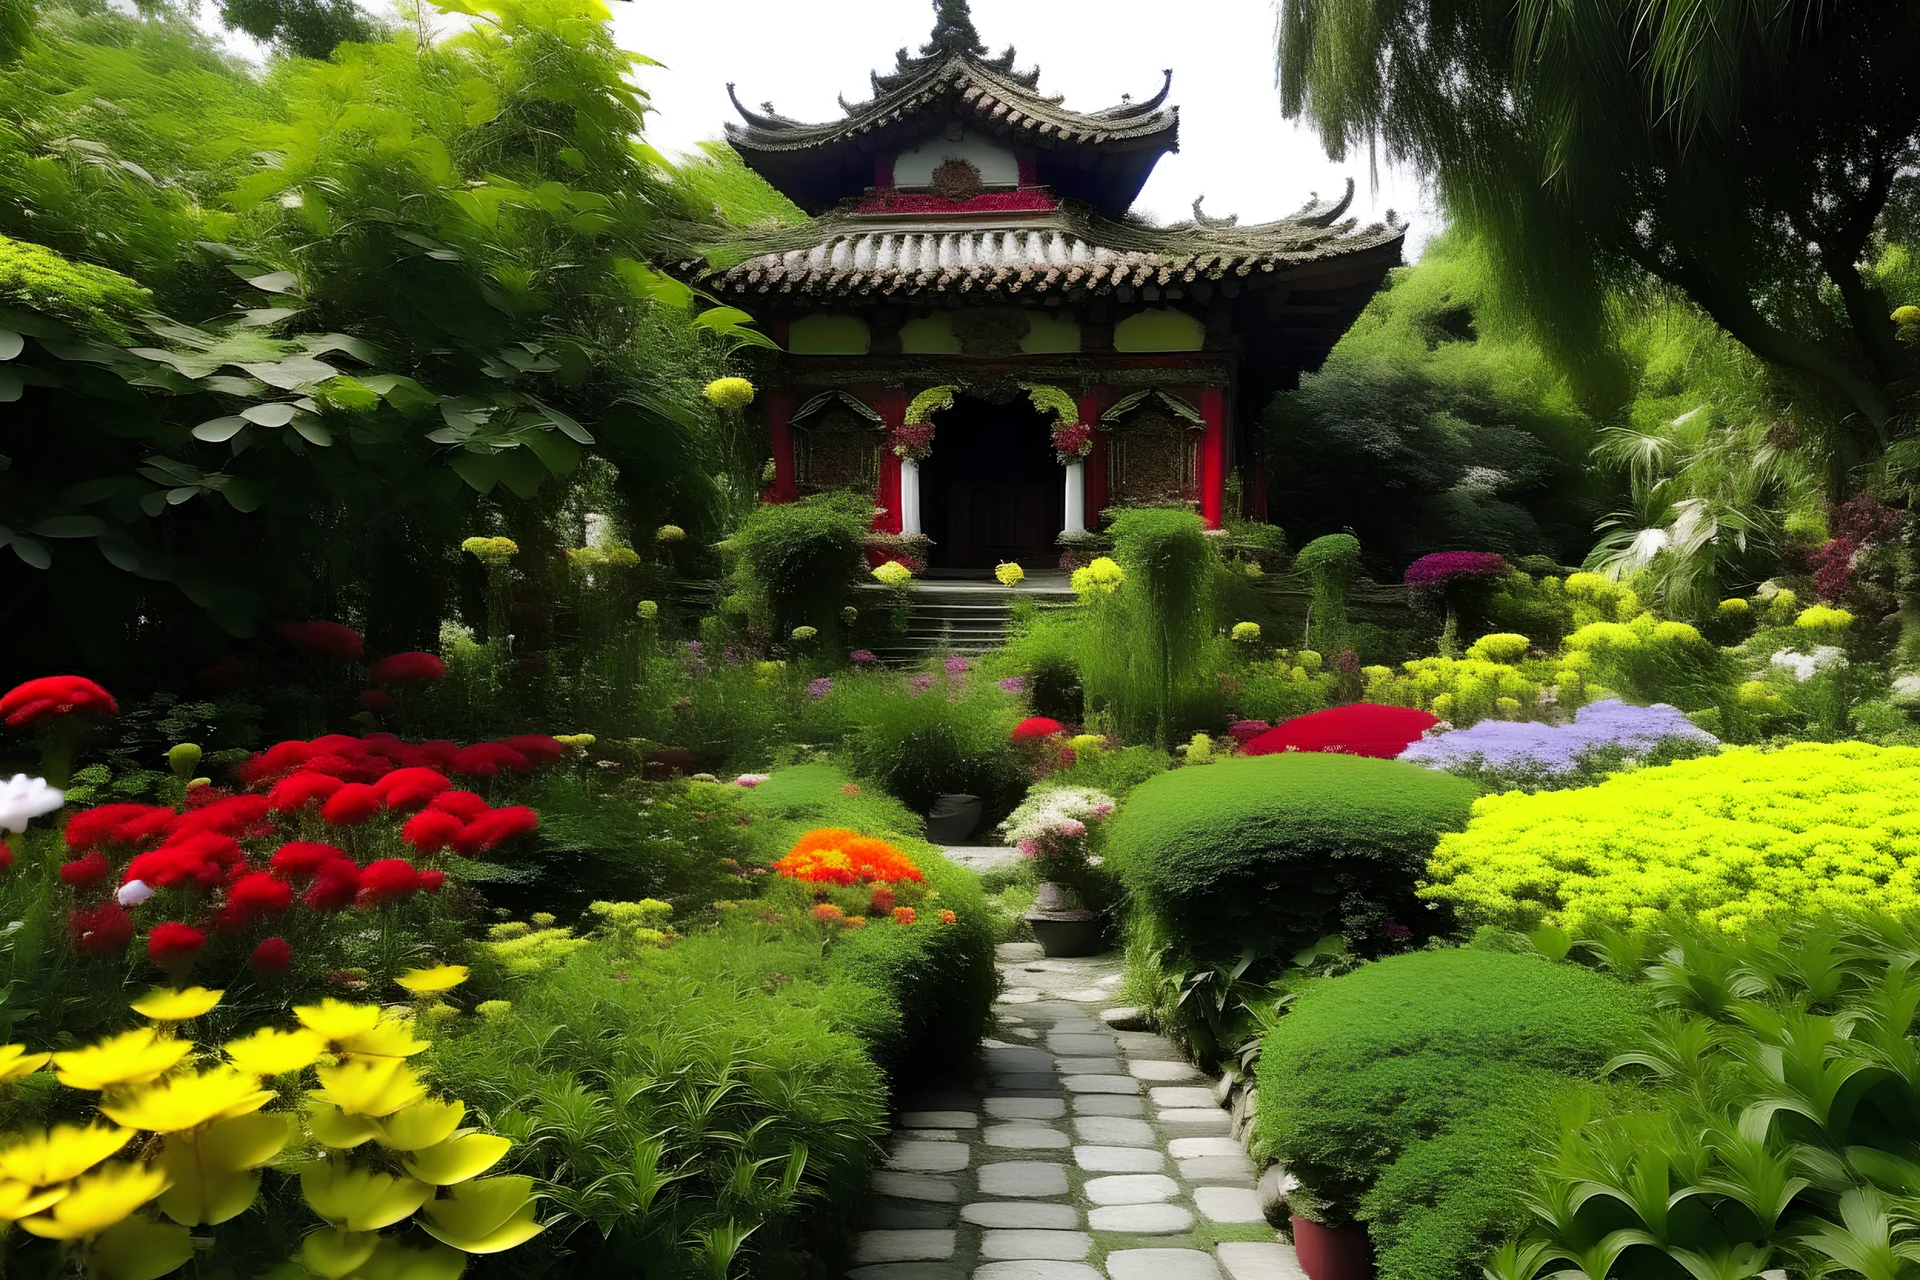 a Buddhist temple near garden full of flowers